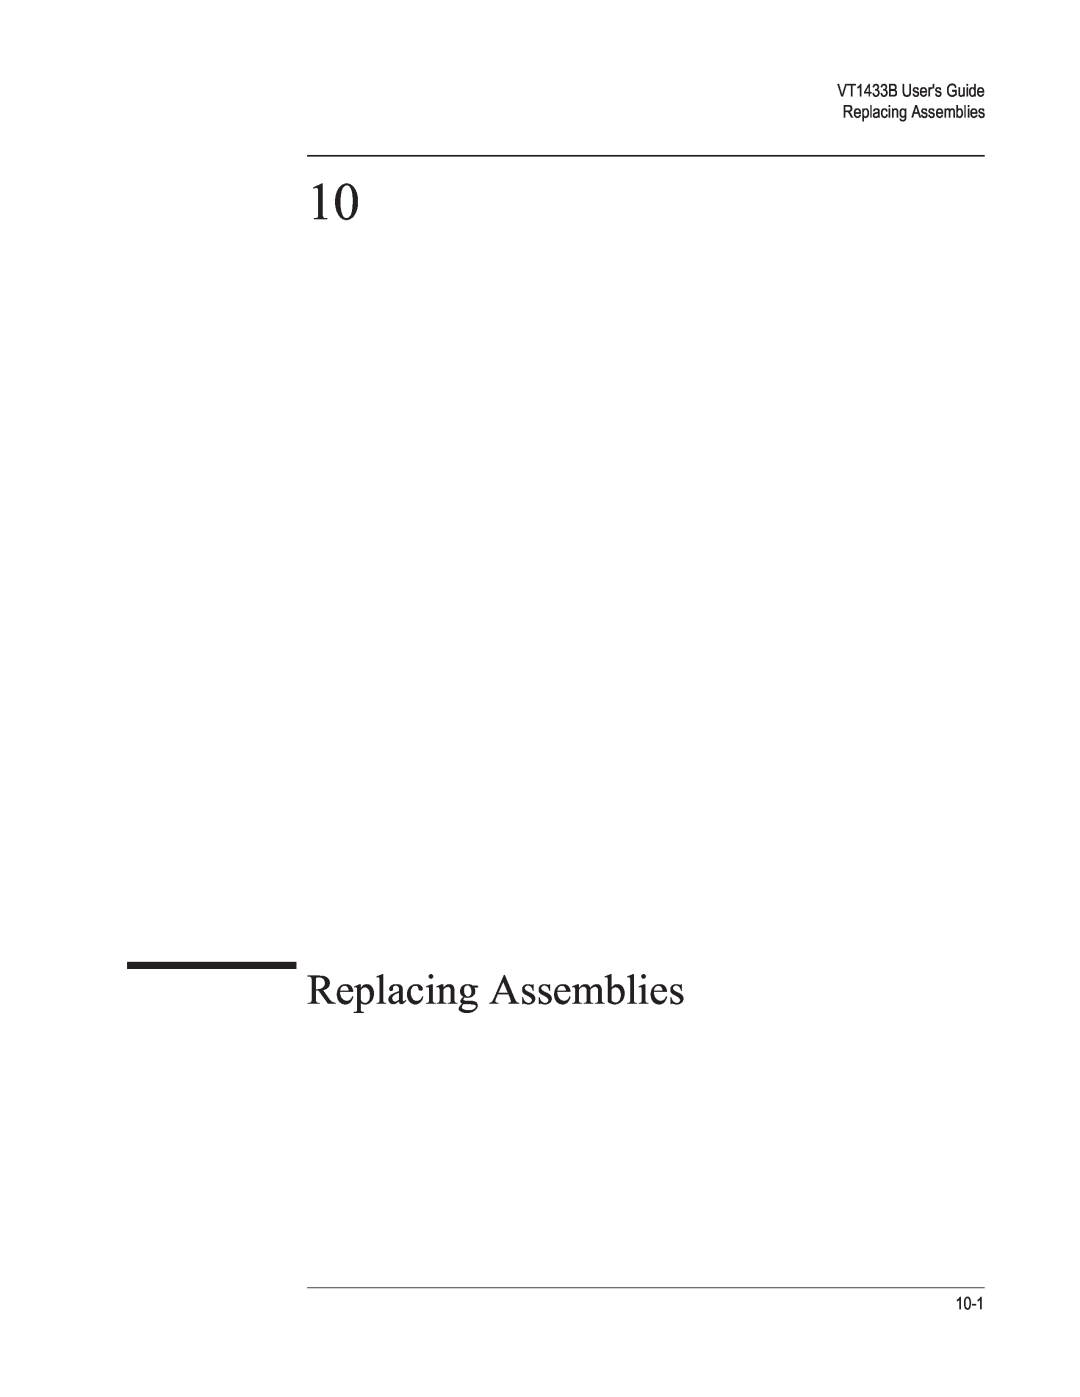 VXI manual VT1433B Users Guide Replacing Assemblies, 10-1 